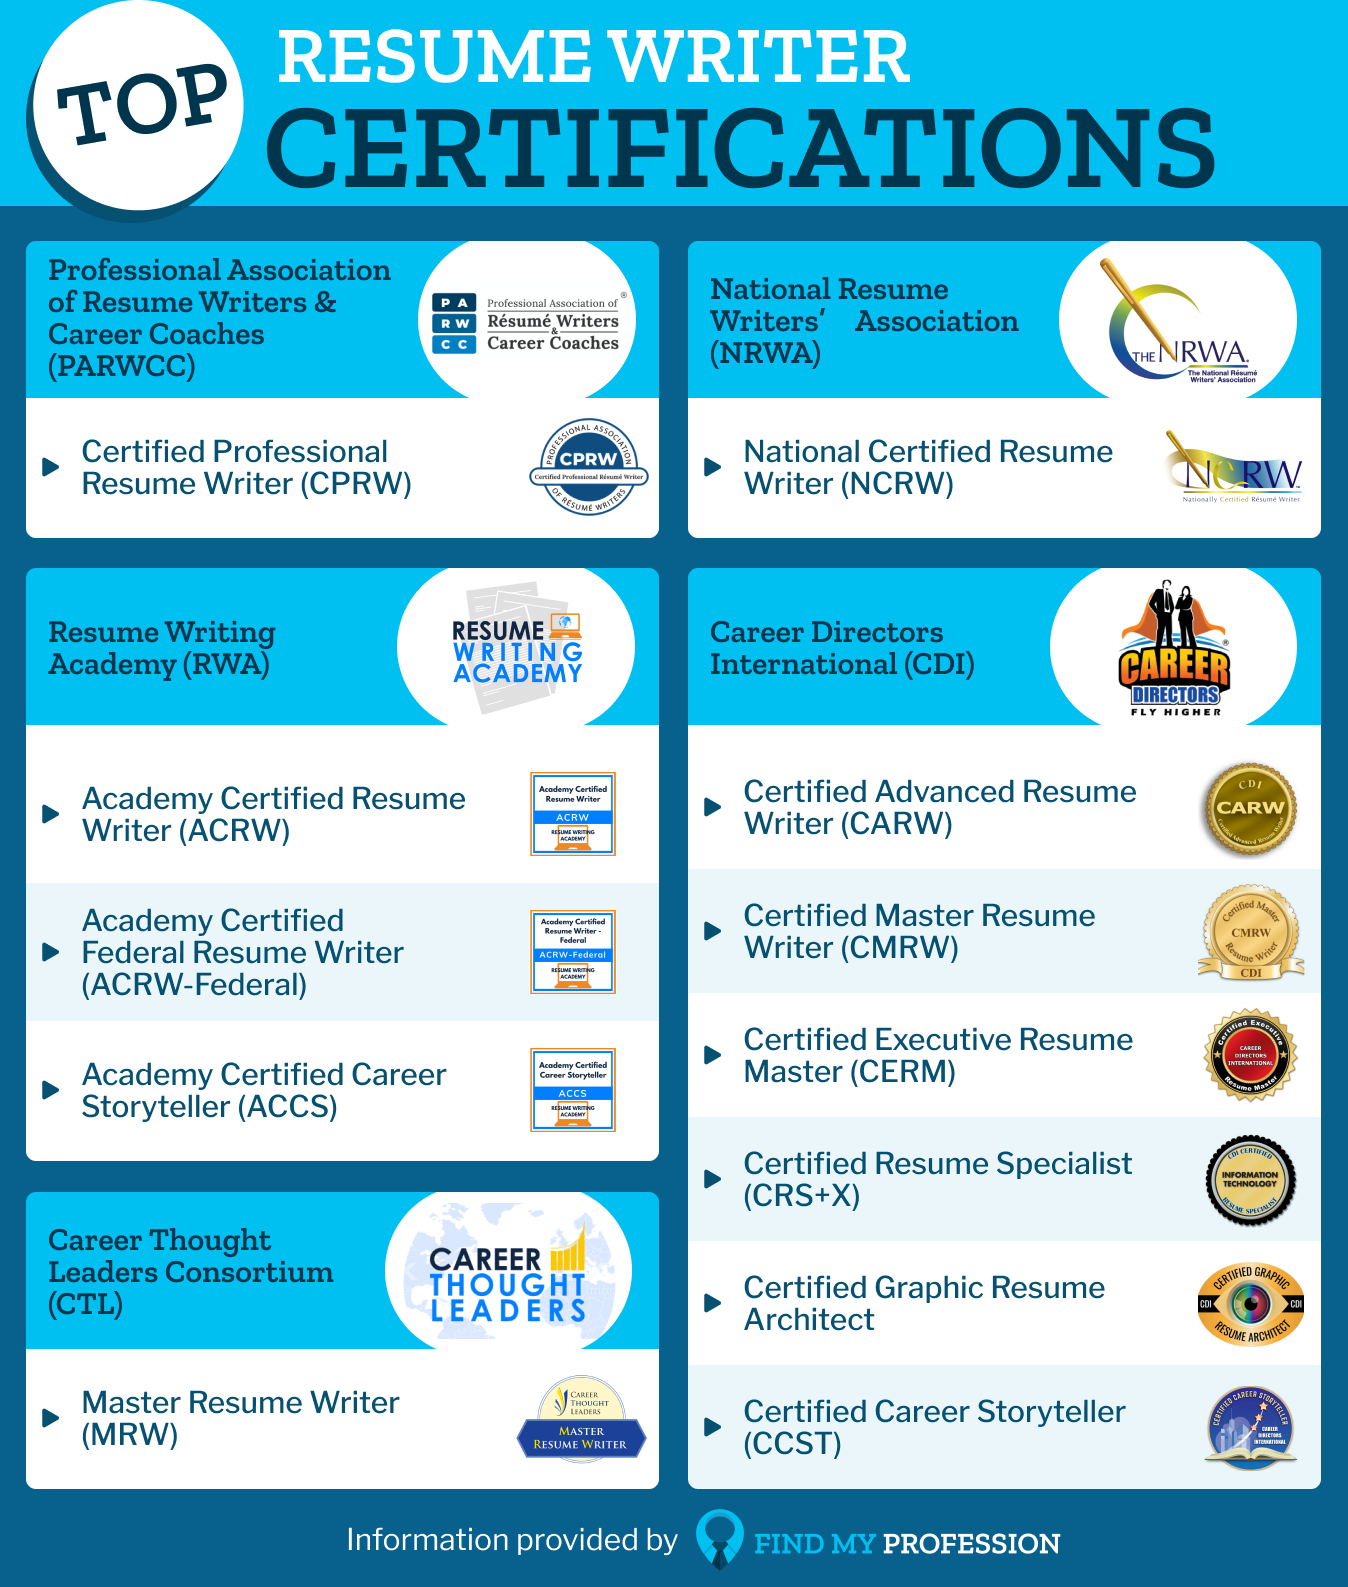 Top Resume Writer Certifications